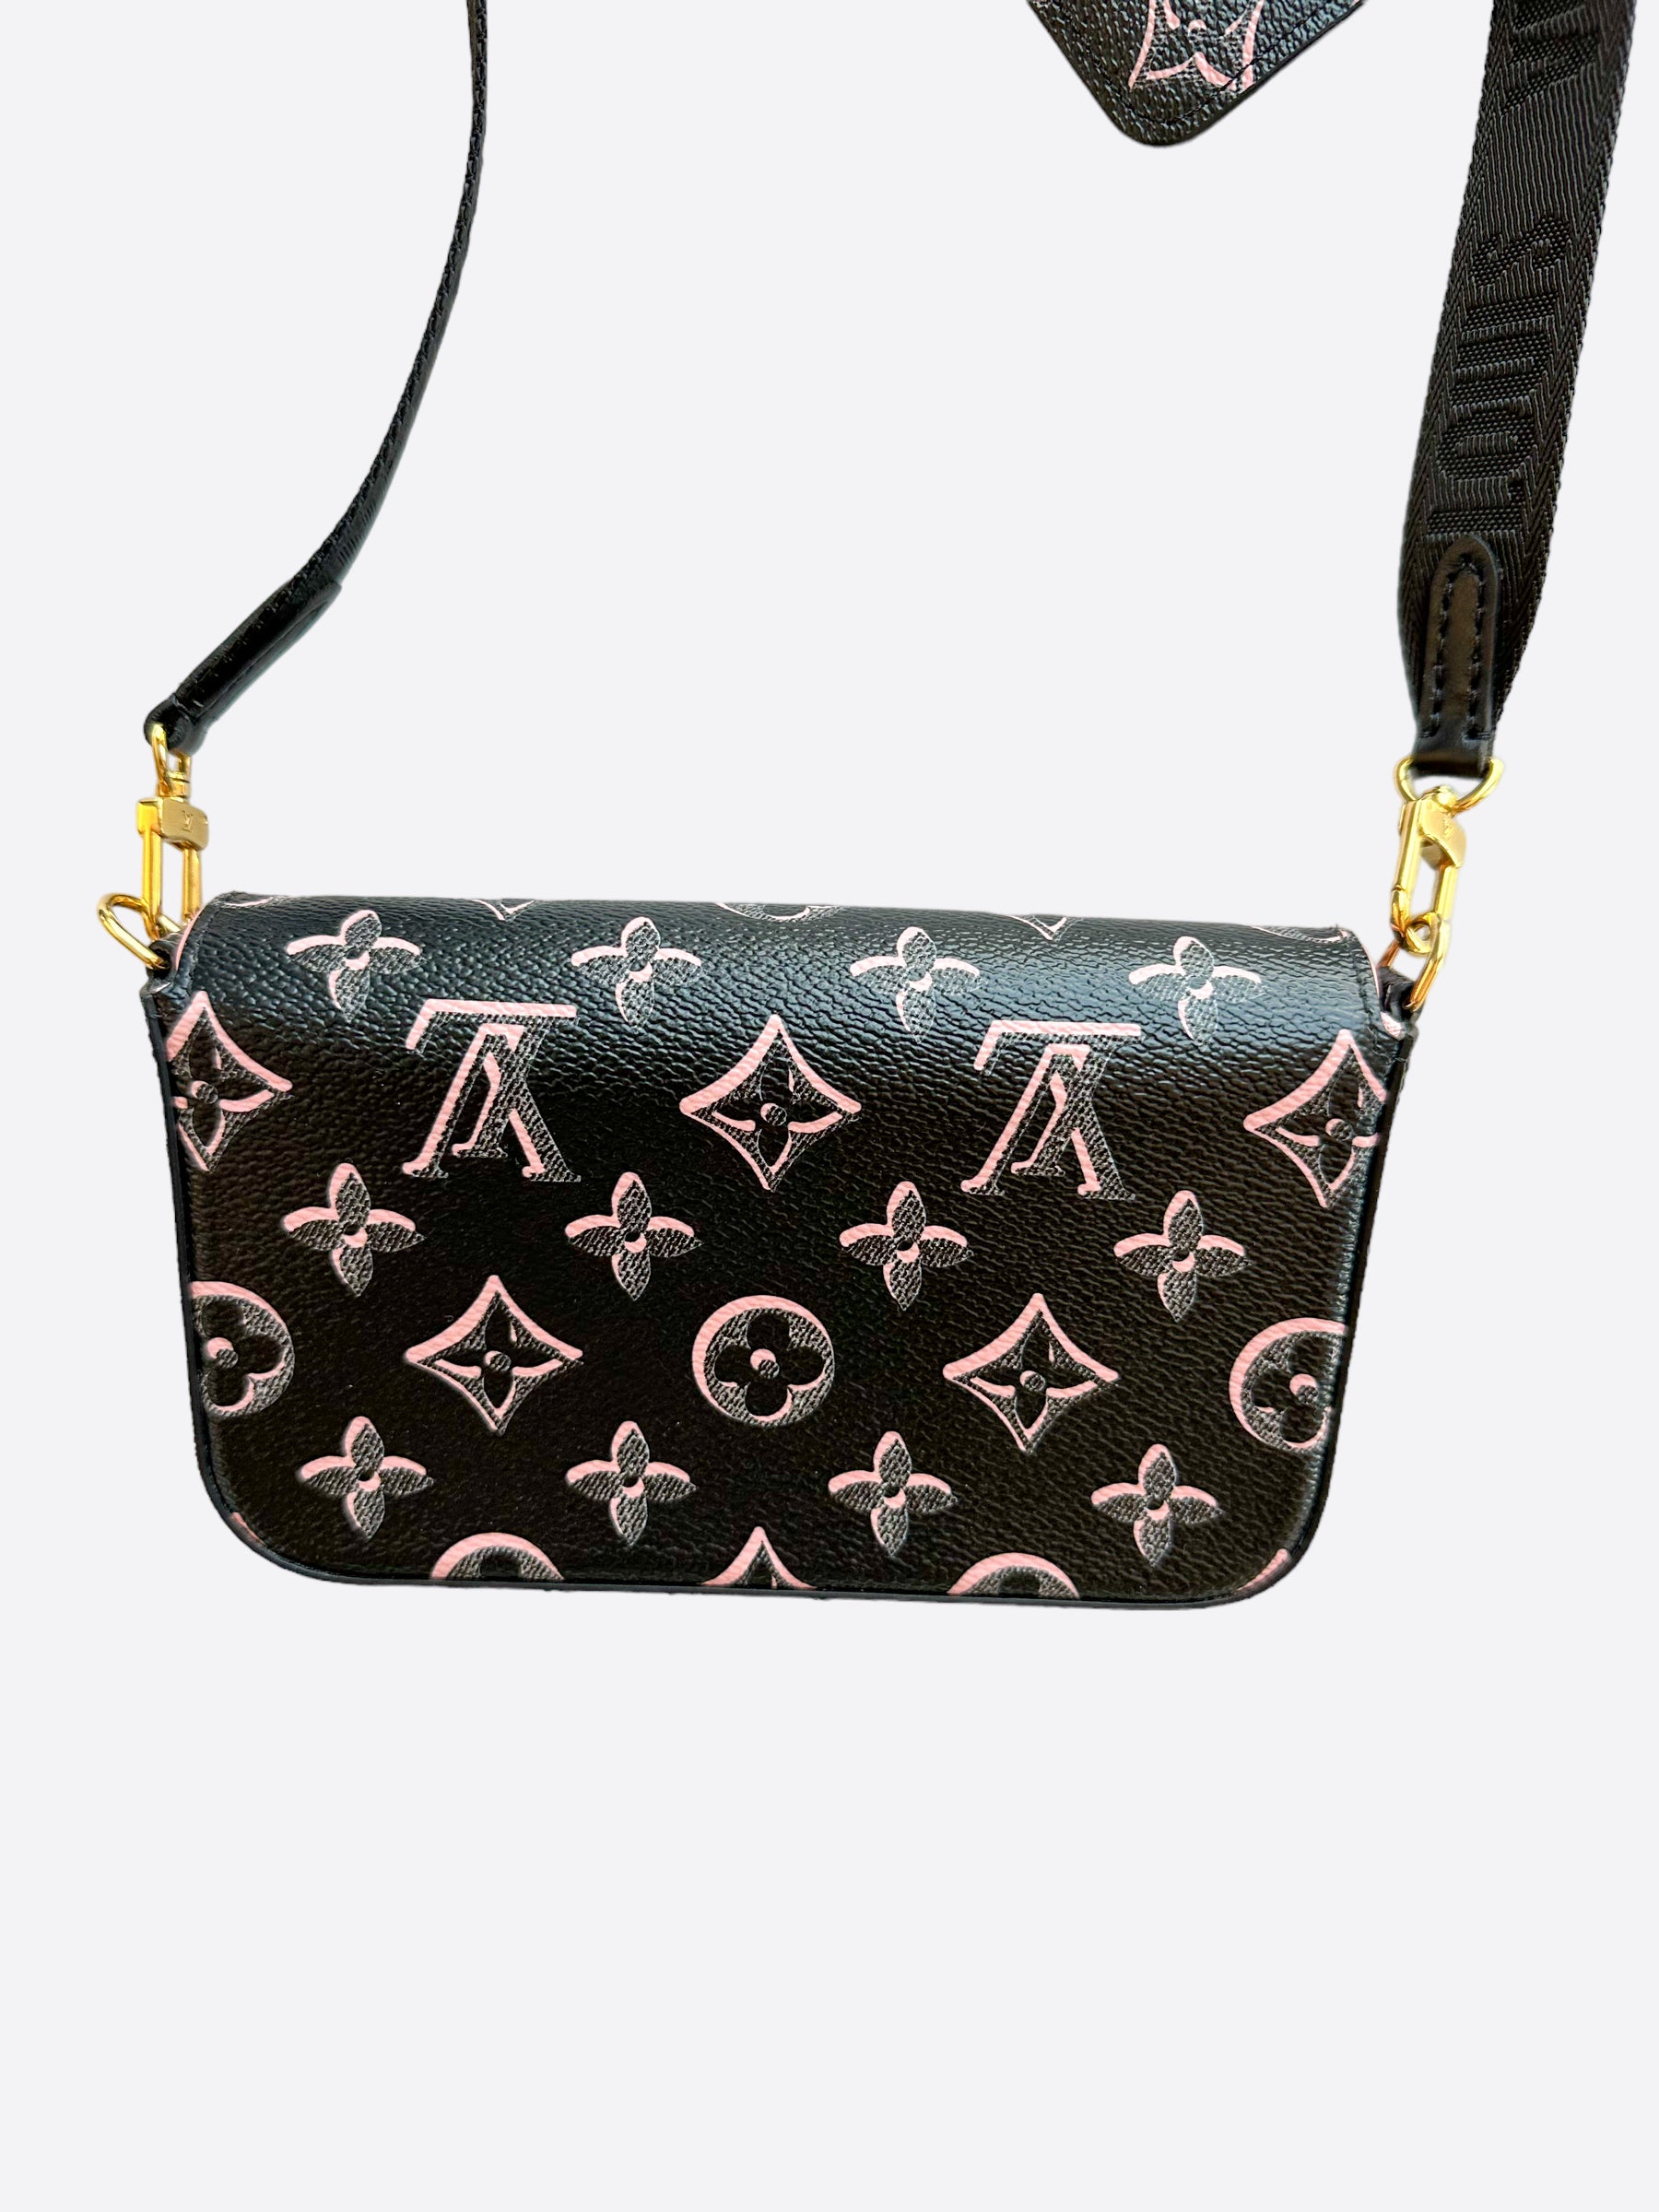 Louis Vuitton Felicie Strap & Go Monogram